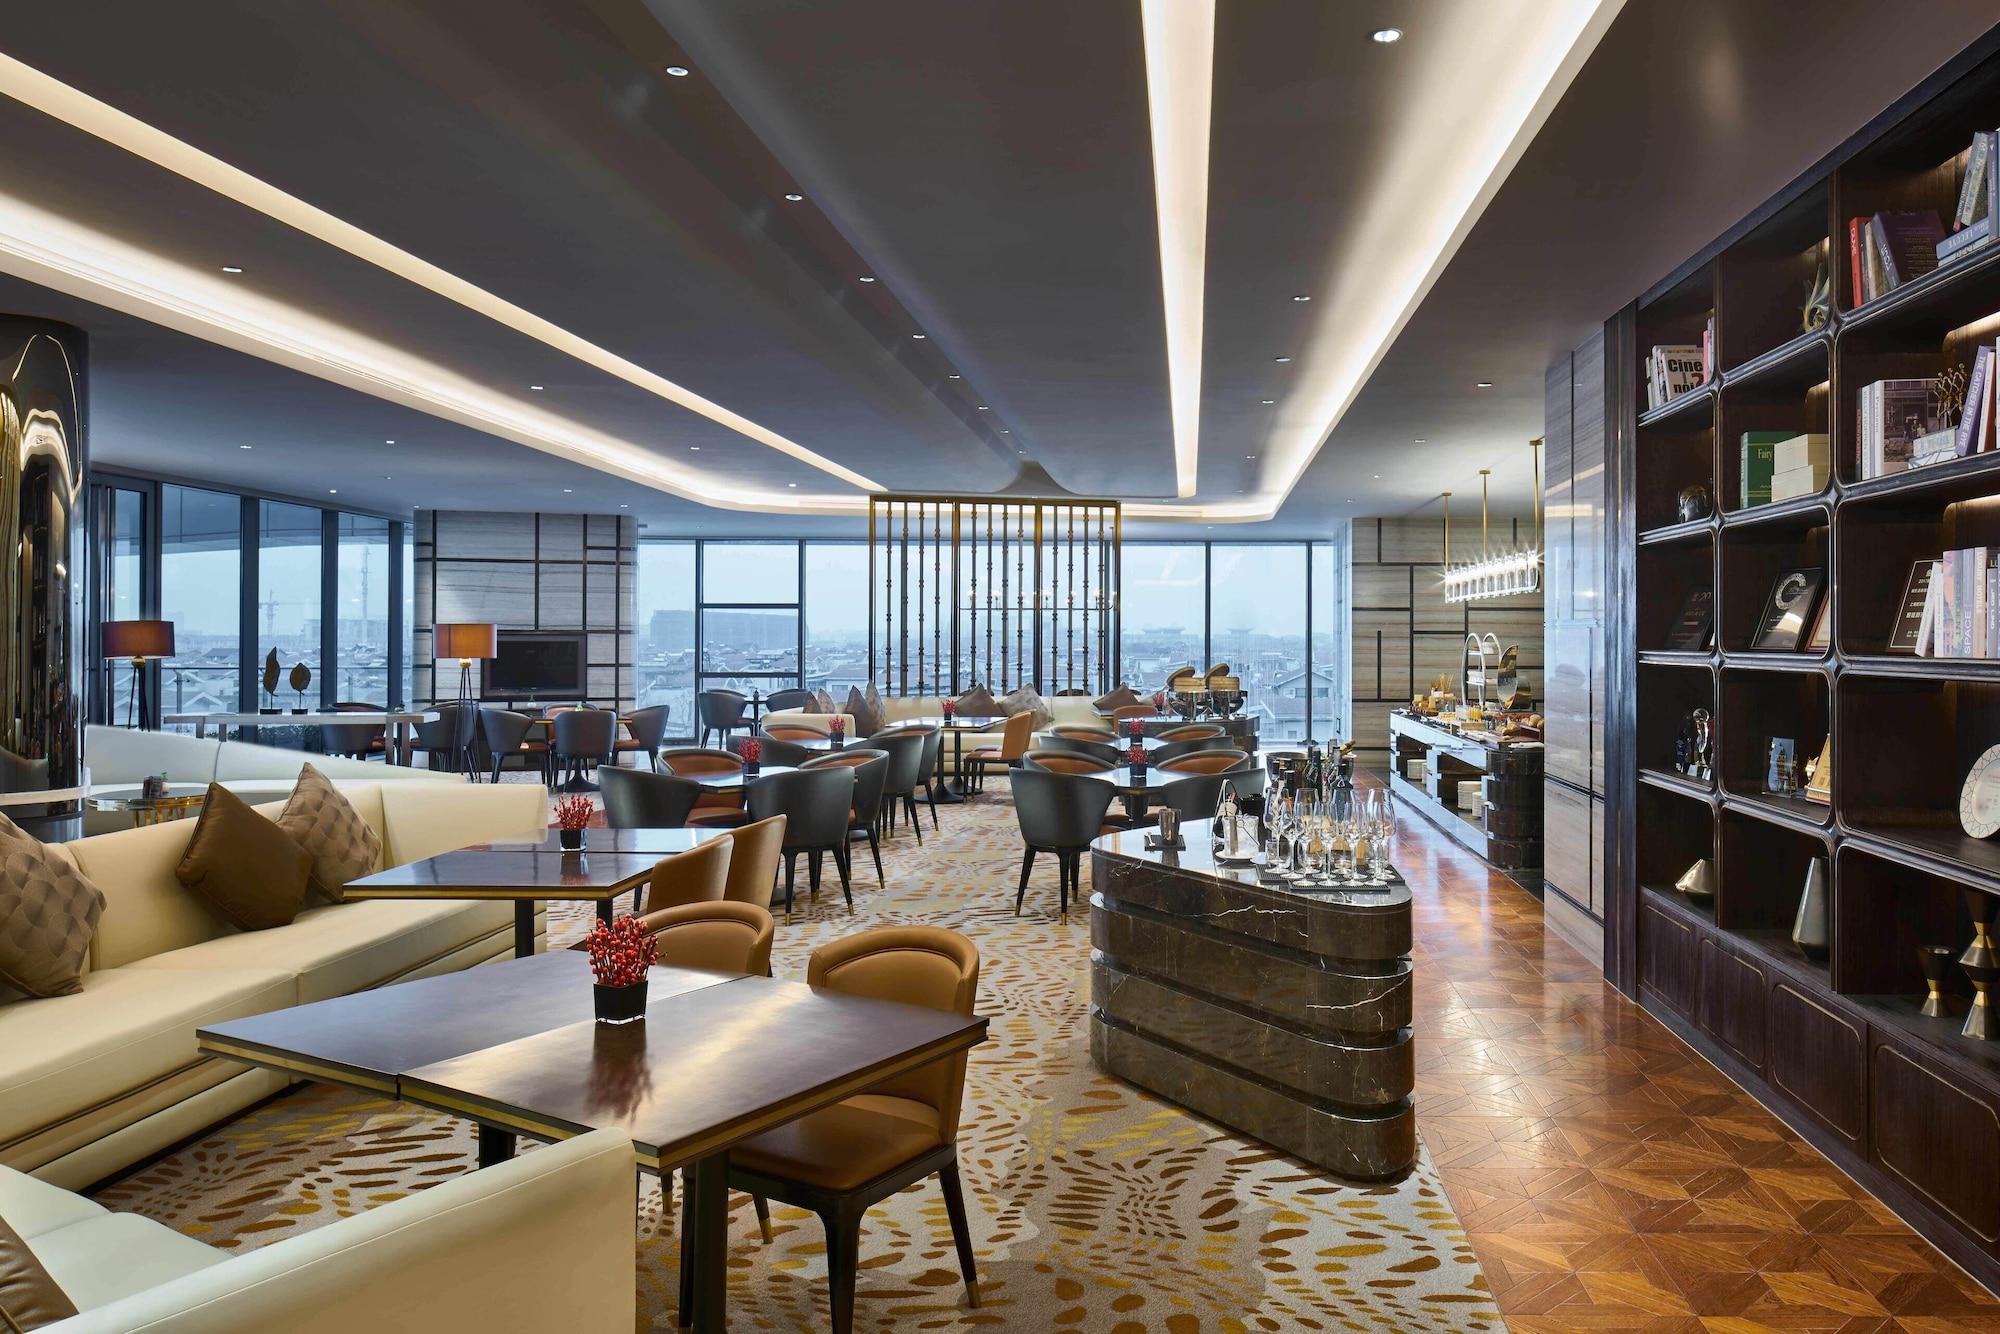 Primus Hotel Shanghai Hongqiao Esterno foto